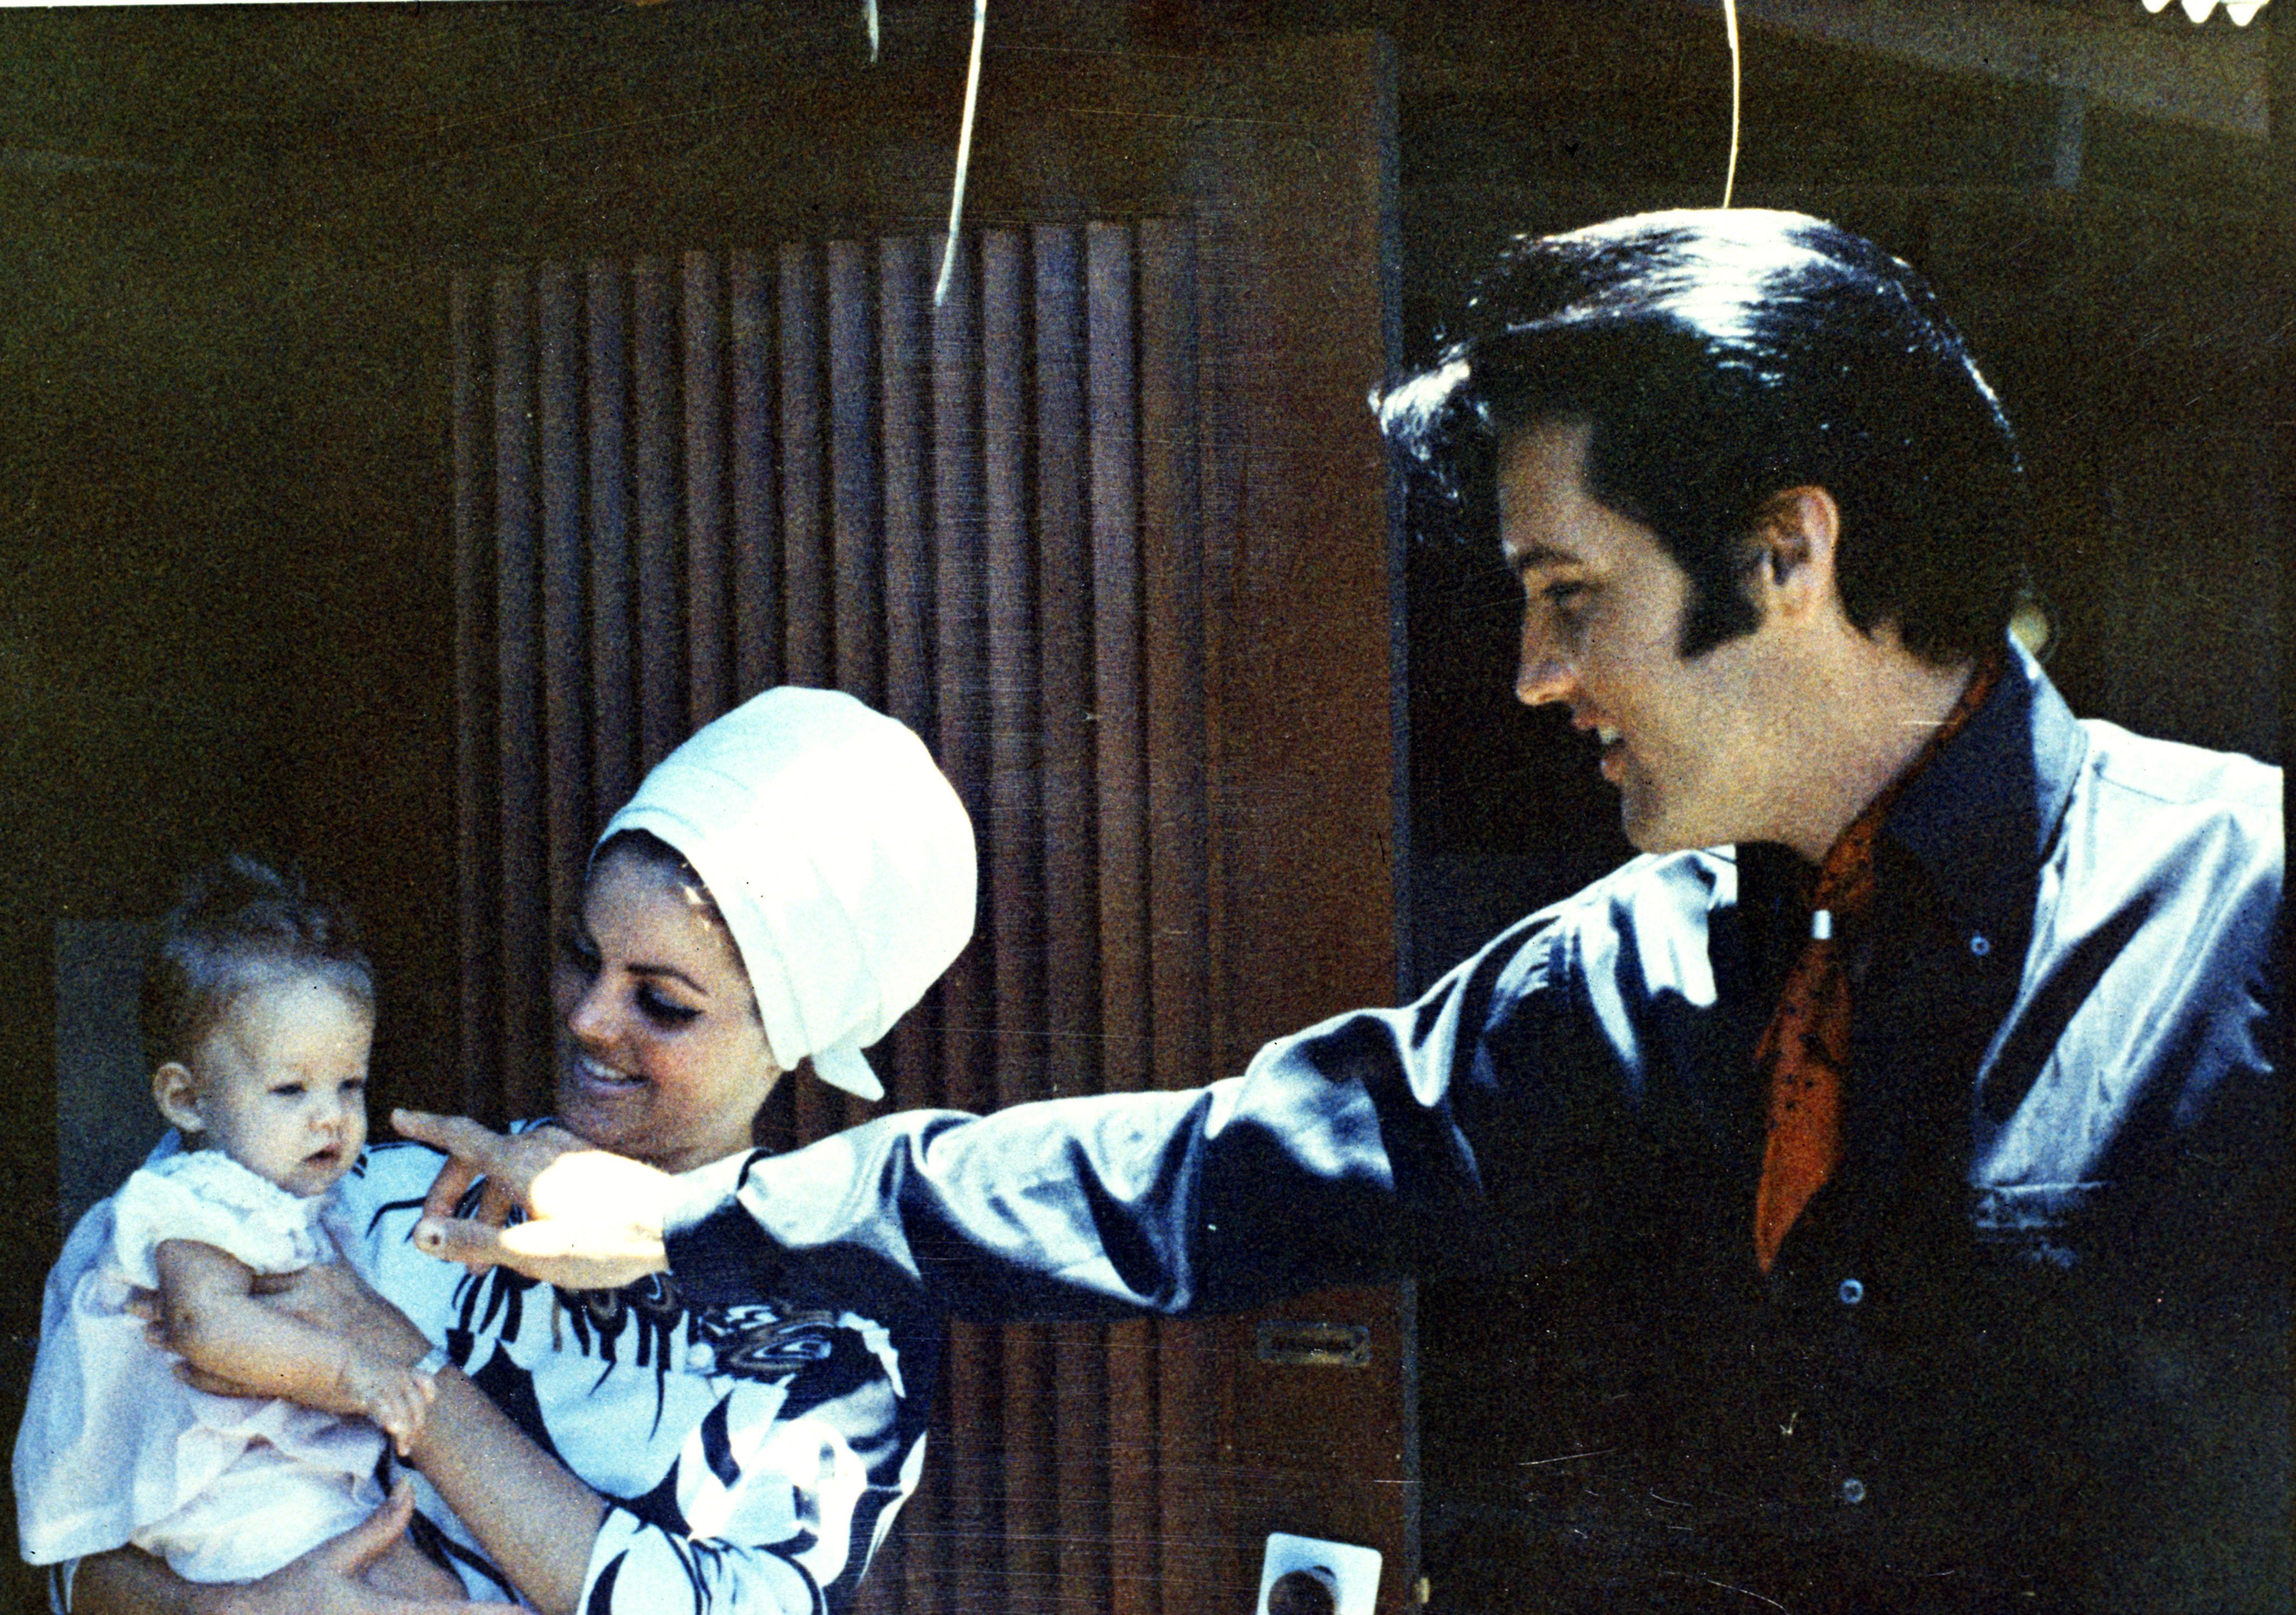 Lisa Marie Presley, Priscilla Presley, and Elvis Presley at home in 1968 | Source: Getty Images